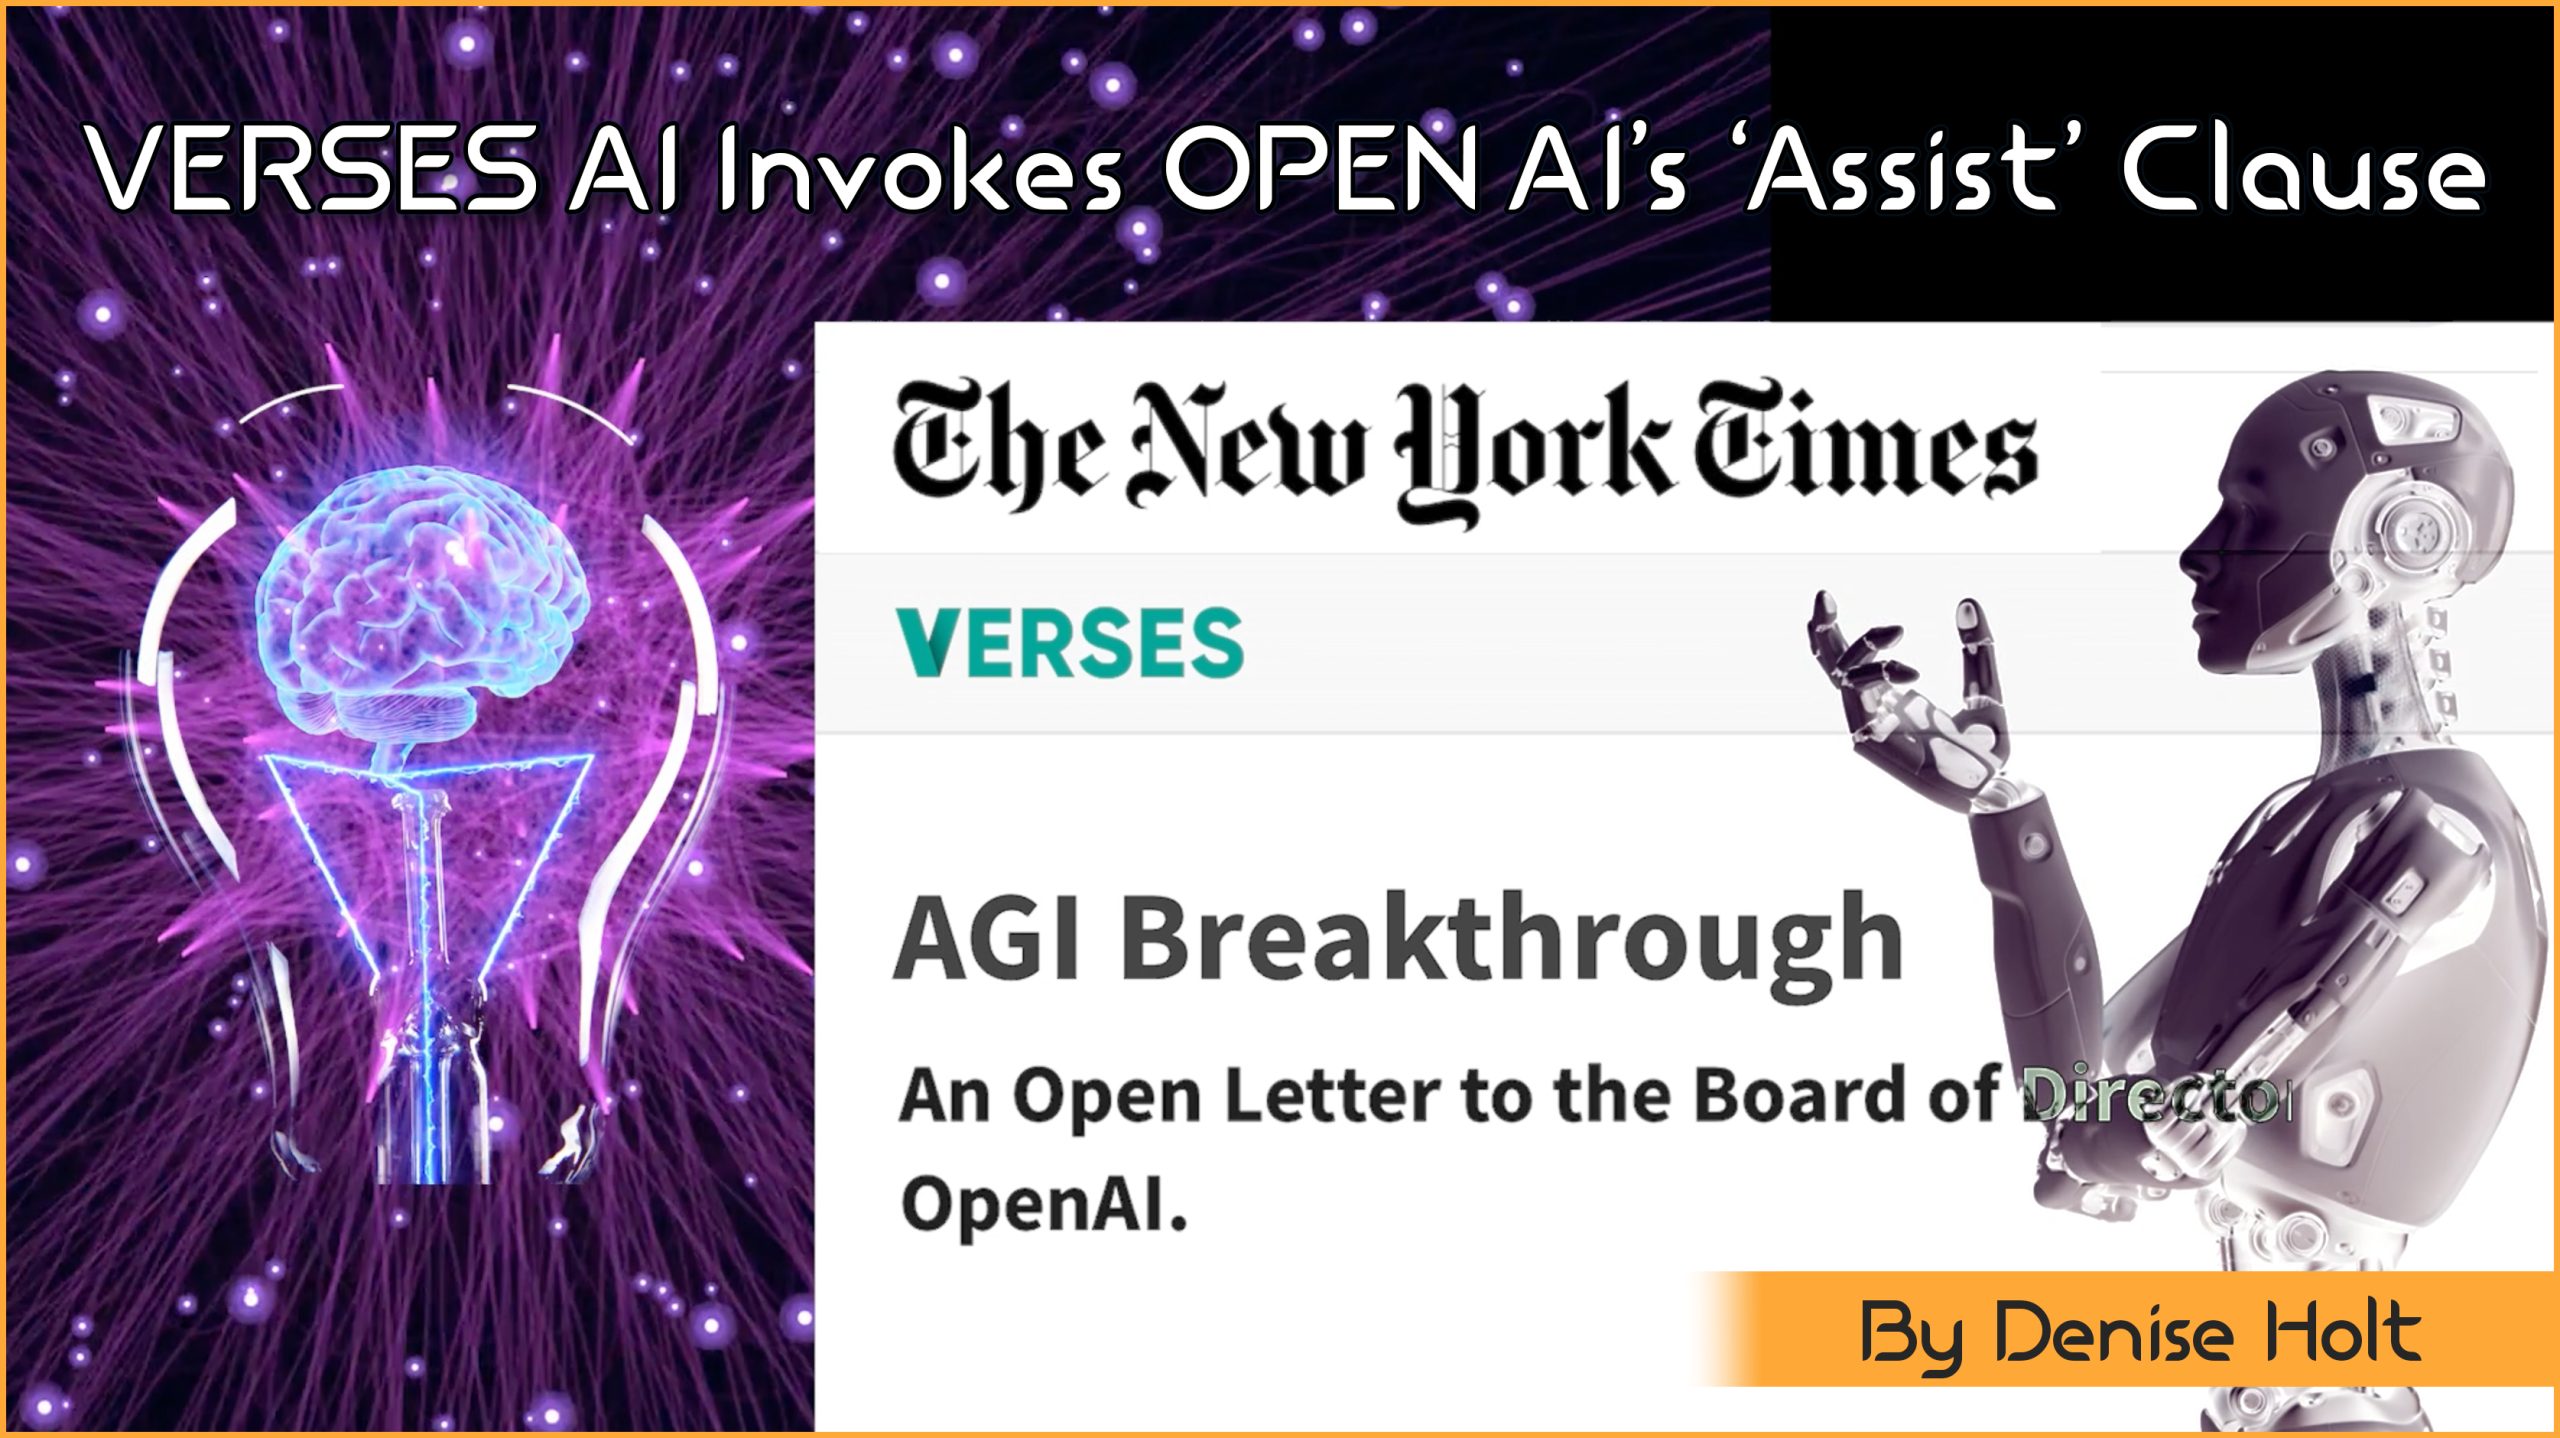 VERSES AI Announces AGI Breakthrough: Invokes Open AI’s ‘Assist’ Clause